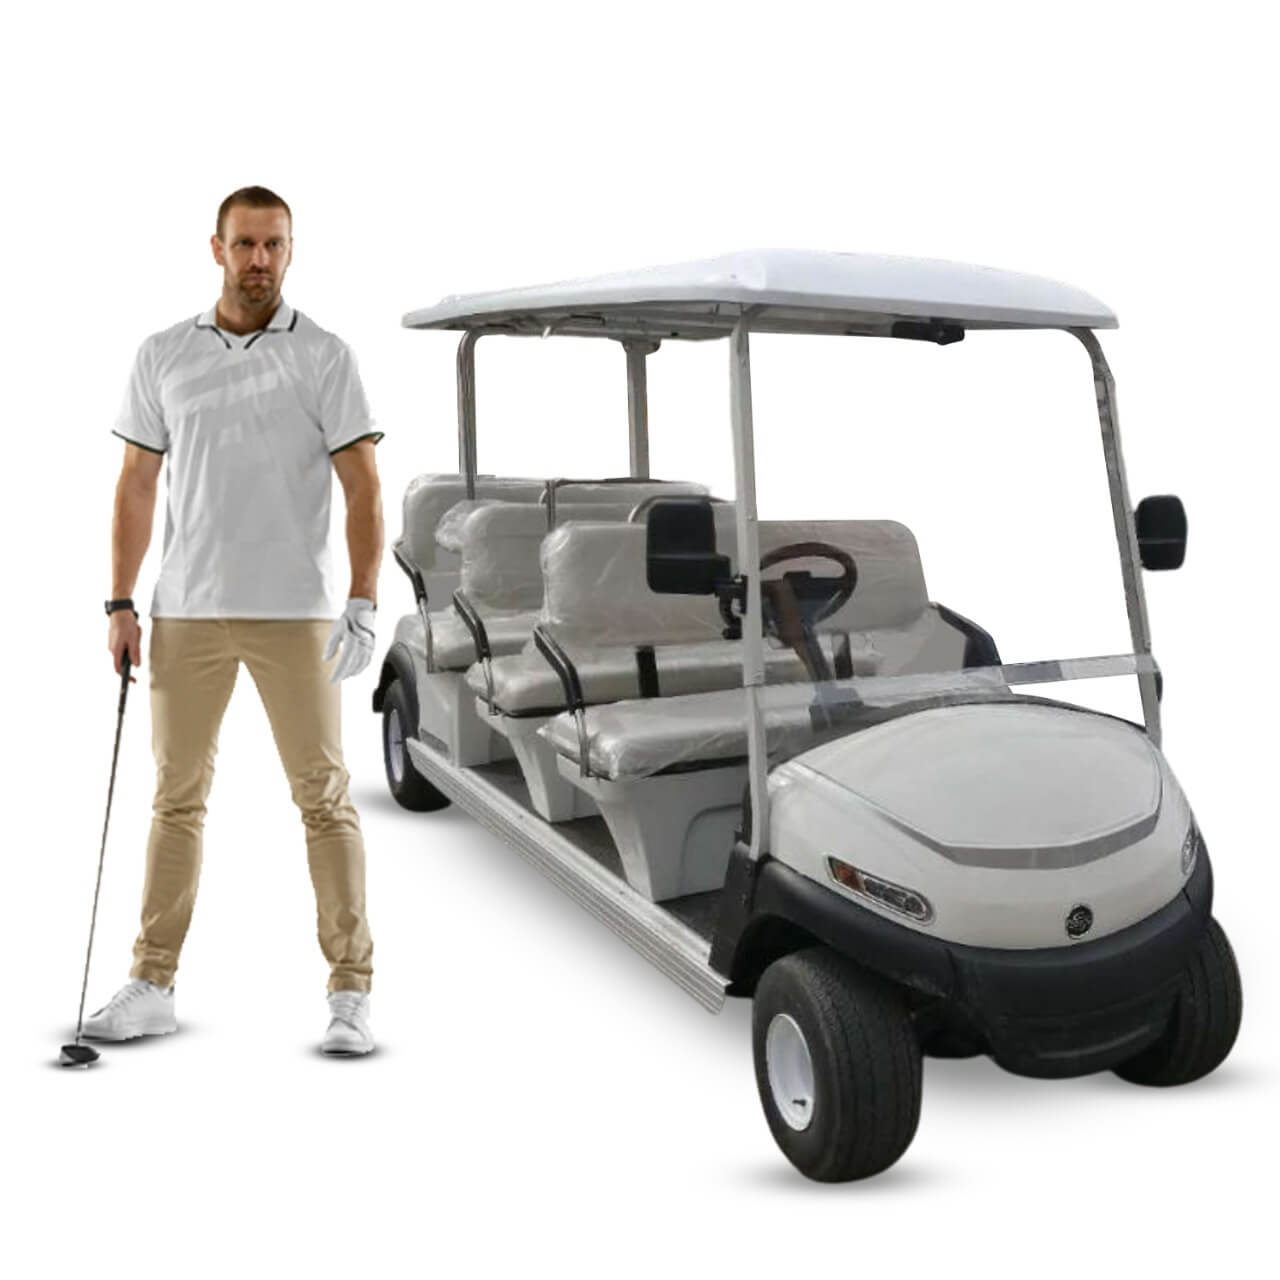 Megastar Golf club car 6 seater  electric golf cart-White